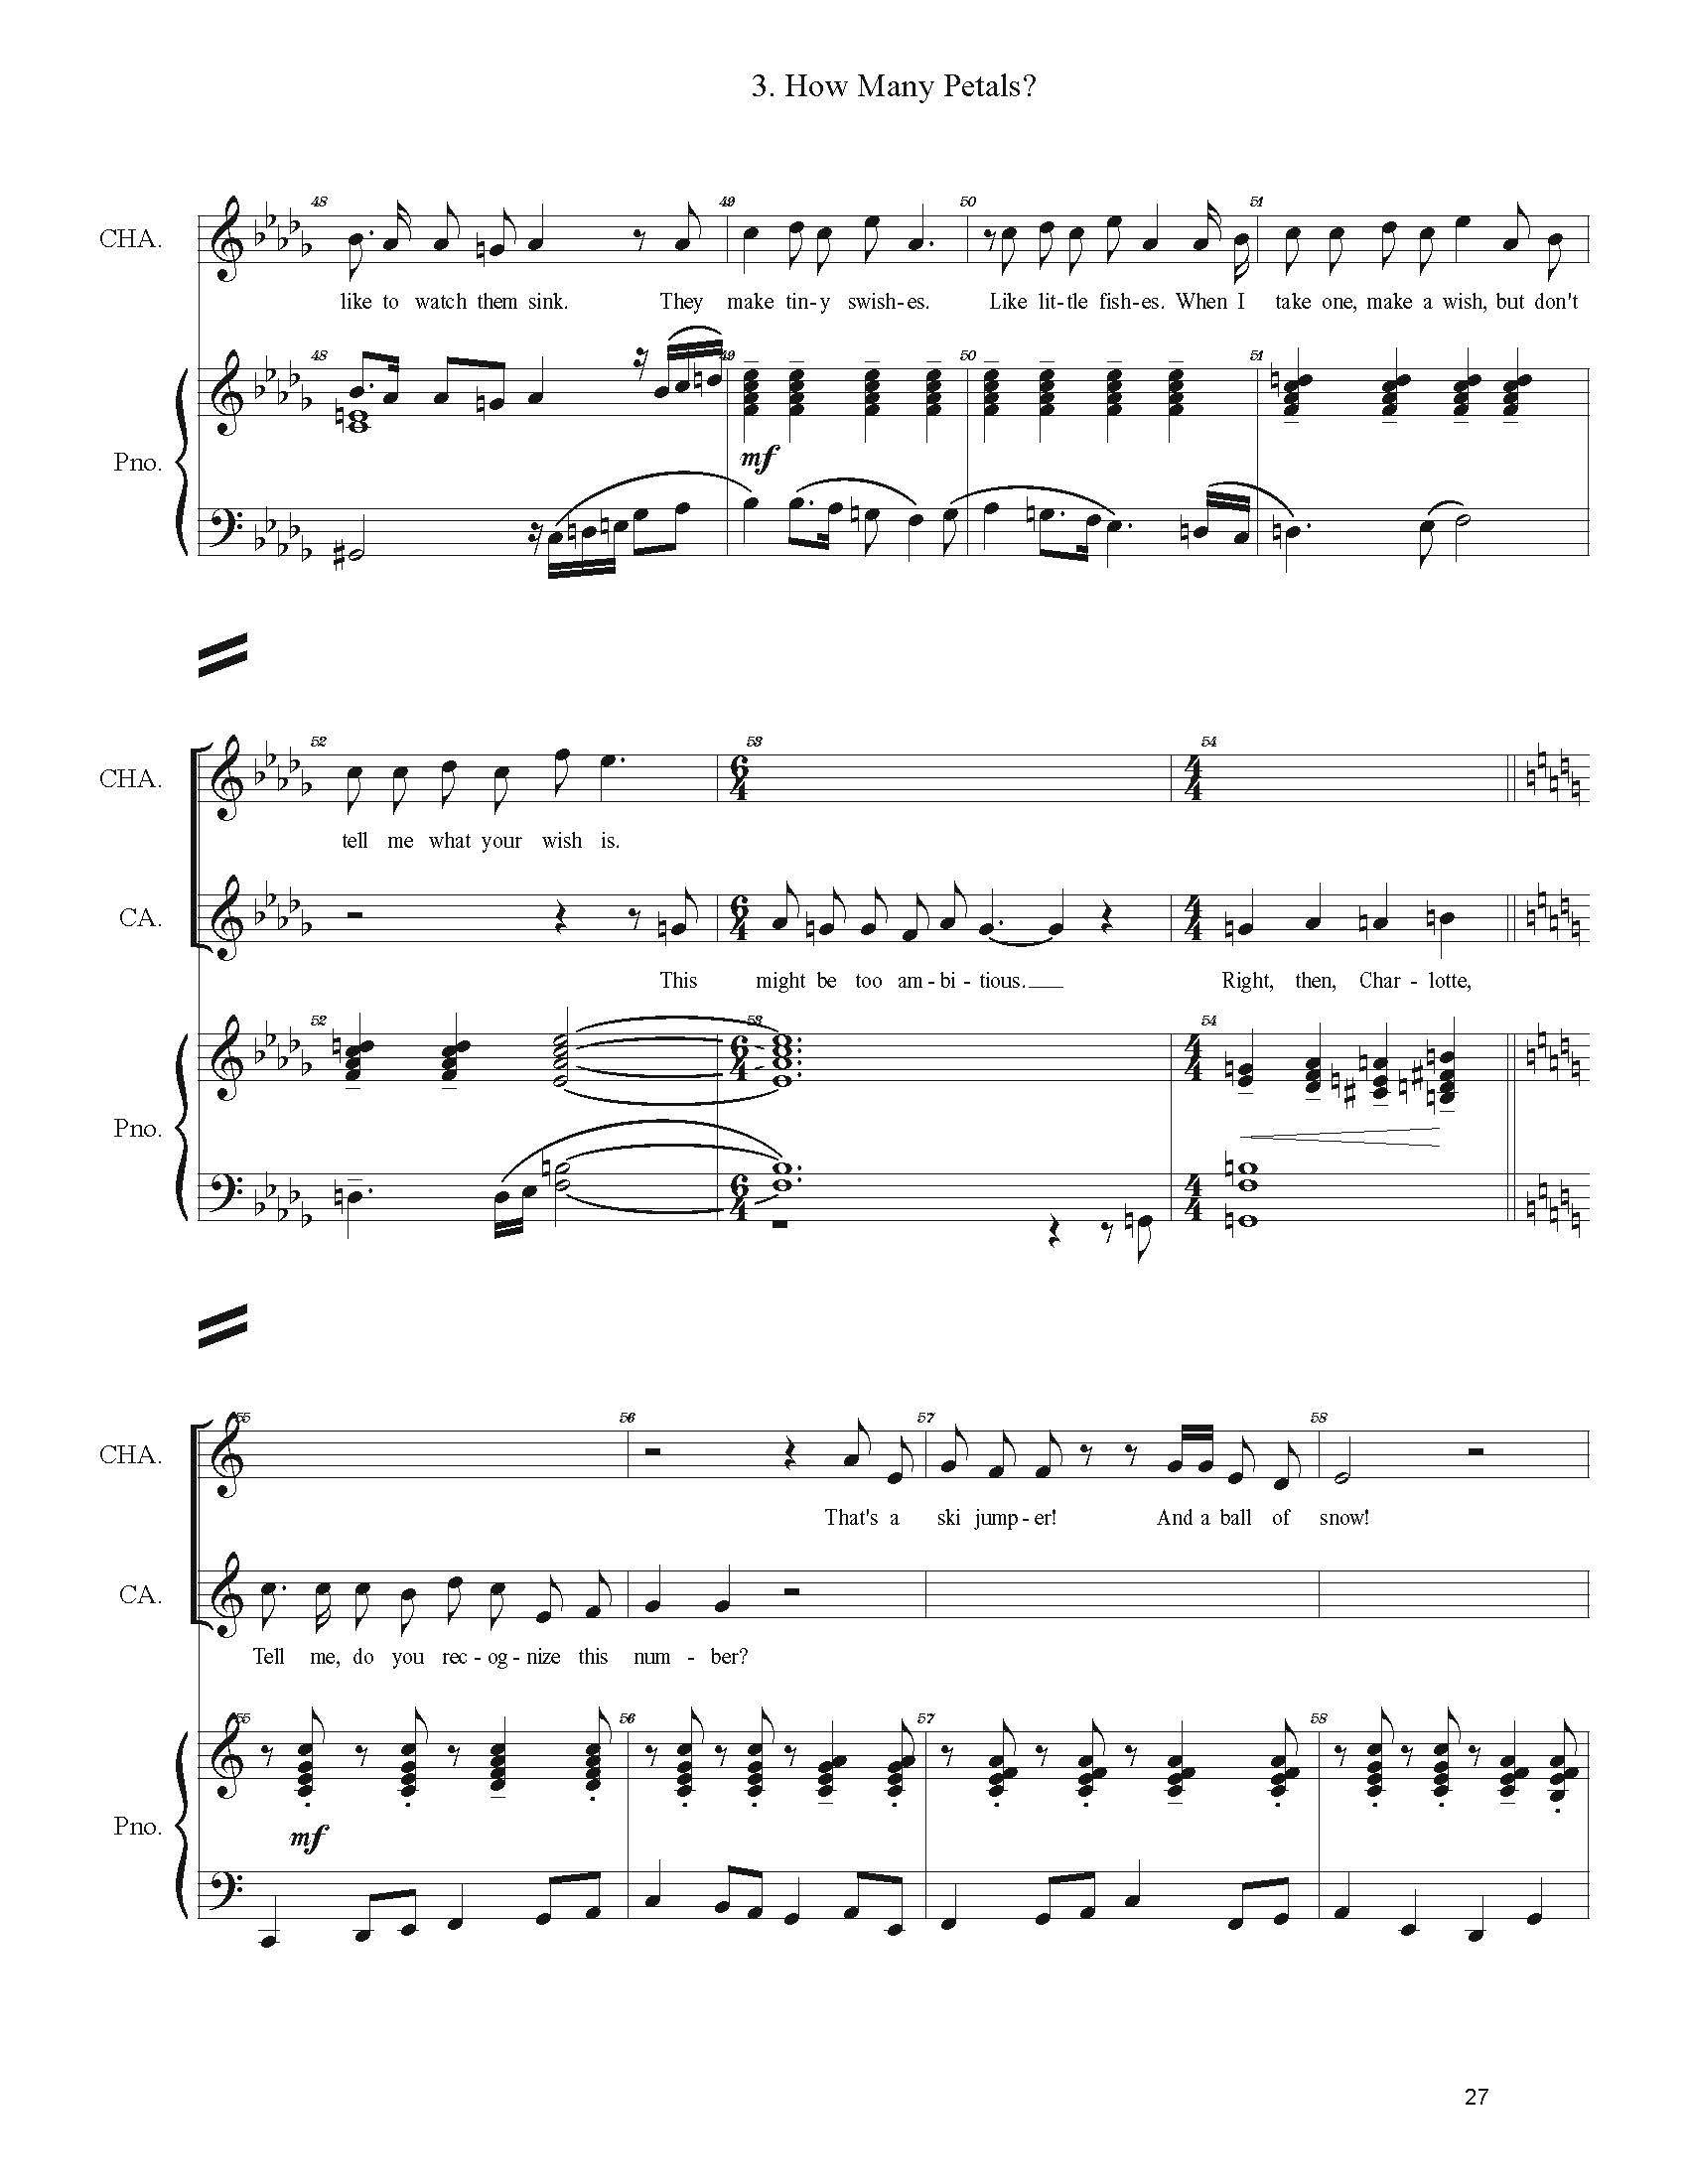 FULL PIANO VOCAL SCORE DRAFT 1 - Score_Page_027.jpg